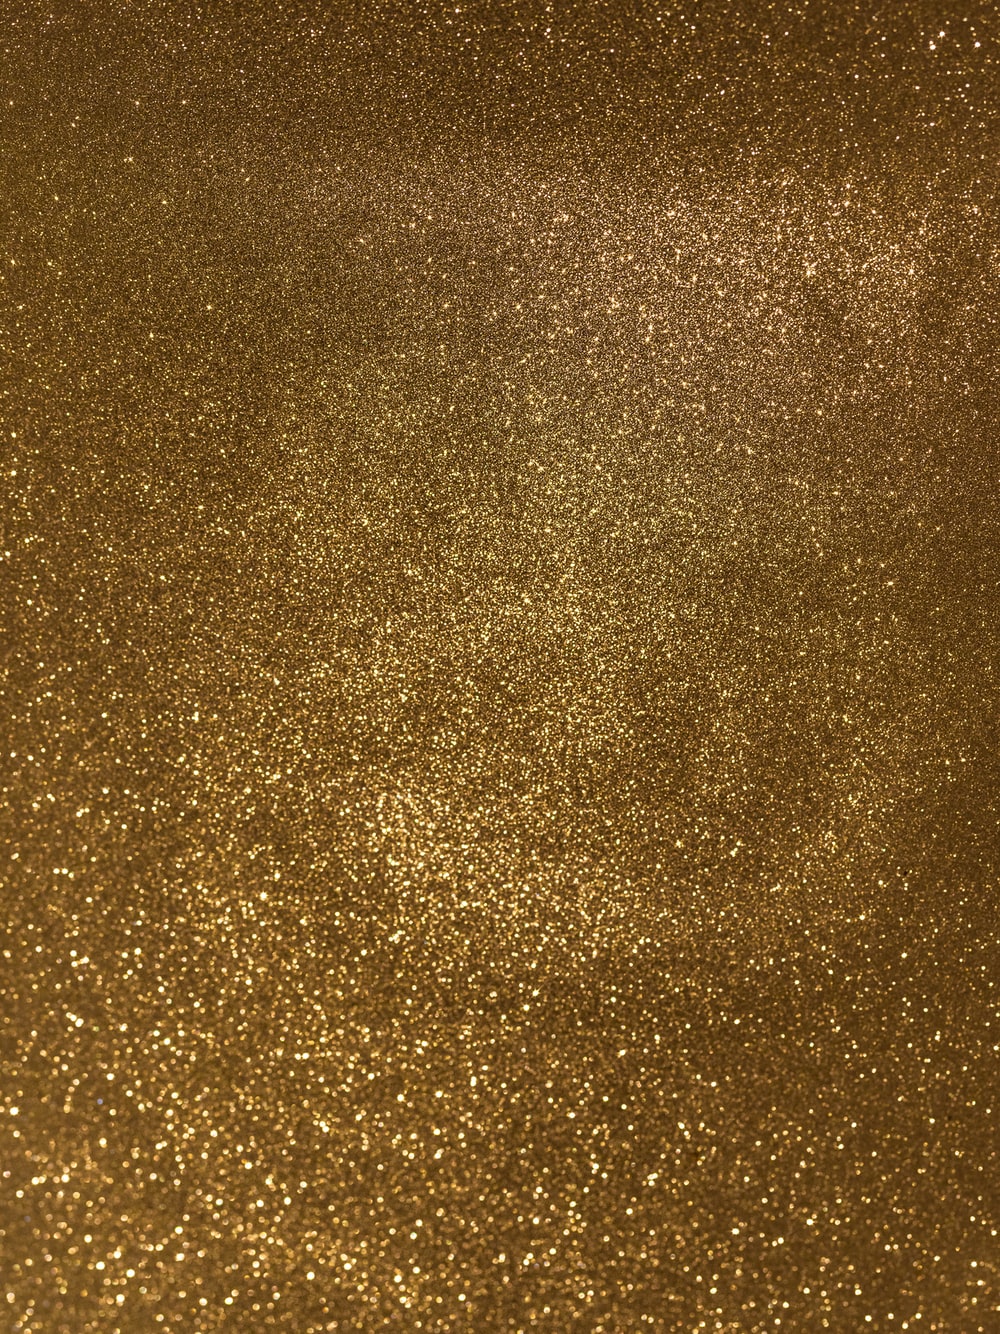 Gold Wallpaper: Free HD Download [HQ]